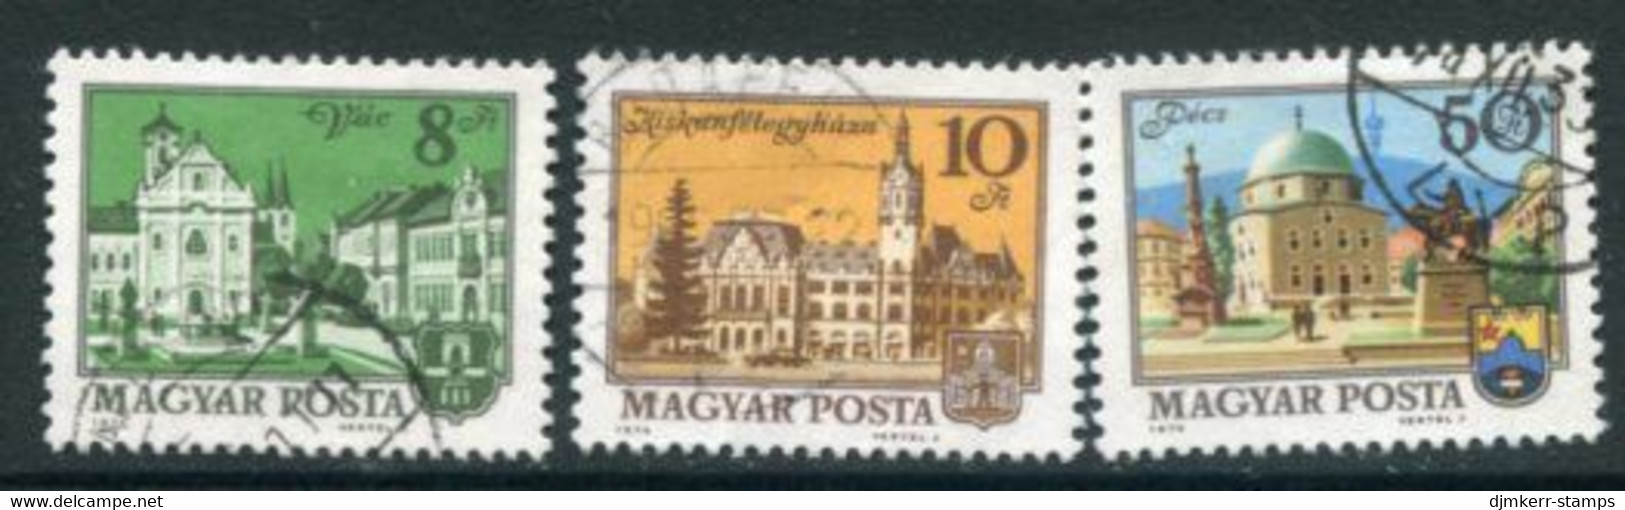 HUNGARY 1974 Towns Definitive 8, 10, 50 Ft. Used.  Michel 3001-003 - Oblitérés